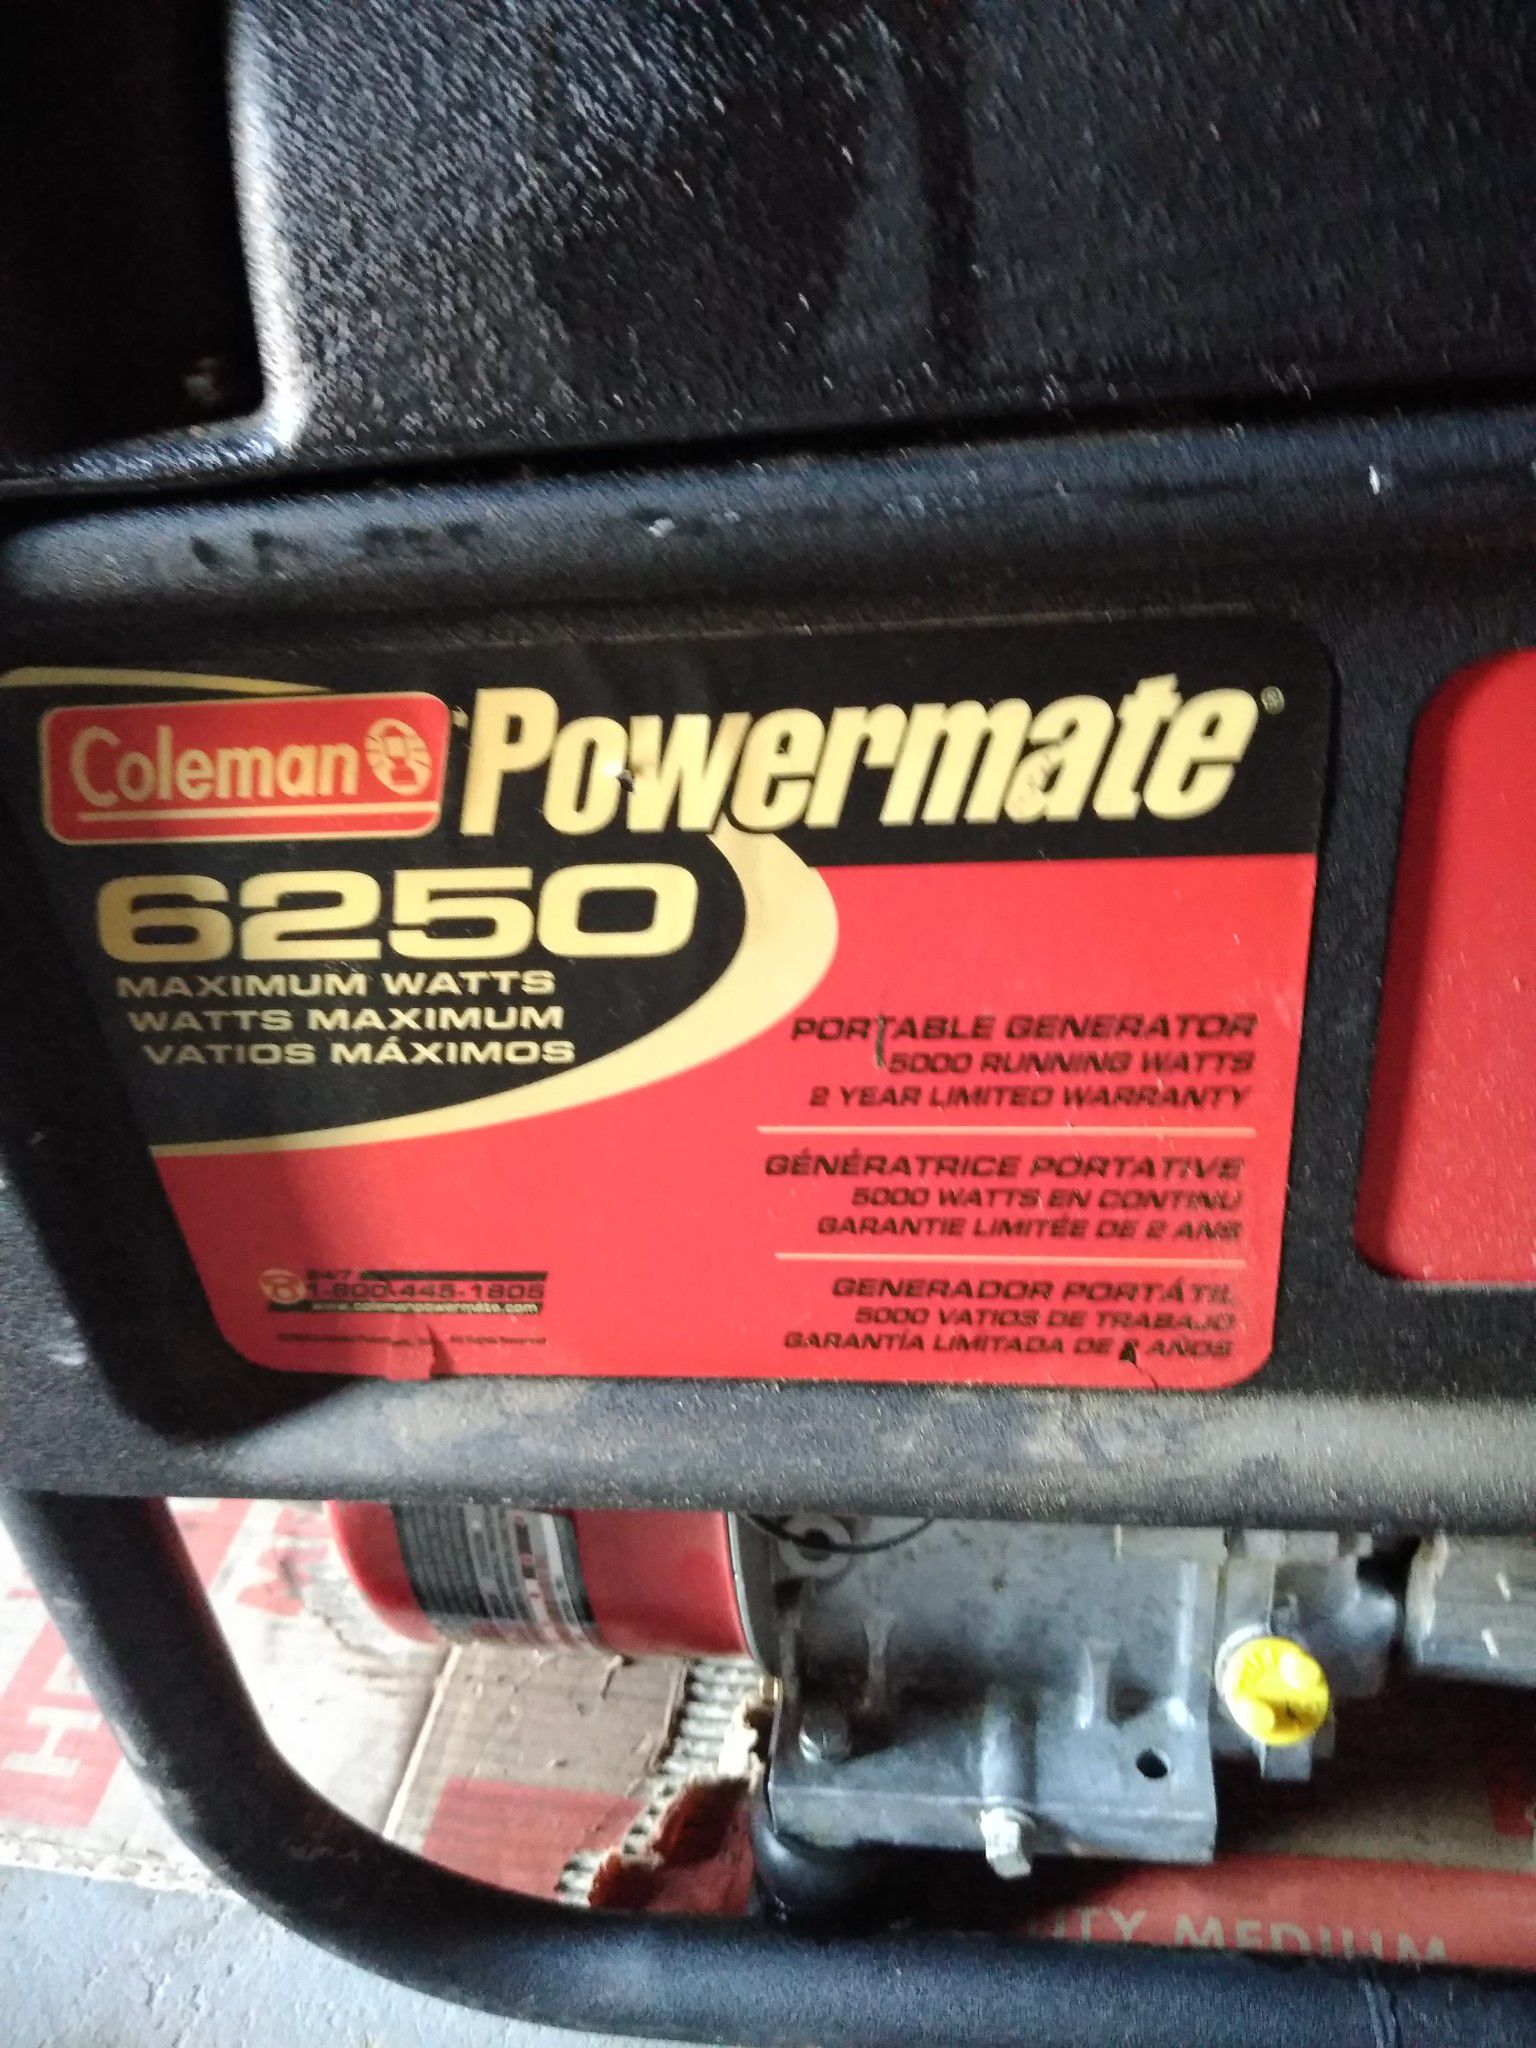 Coleman 6250 generator